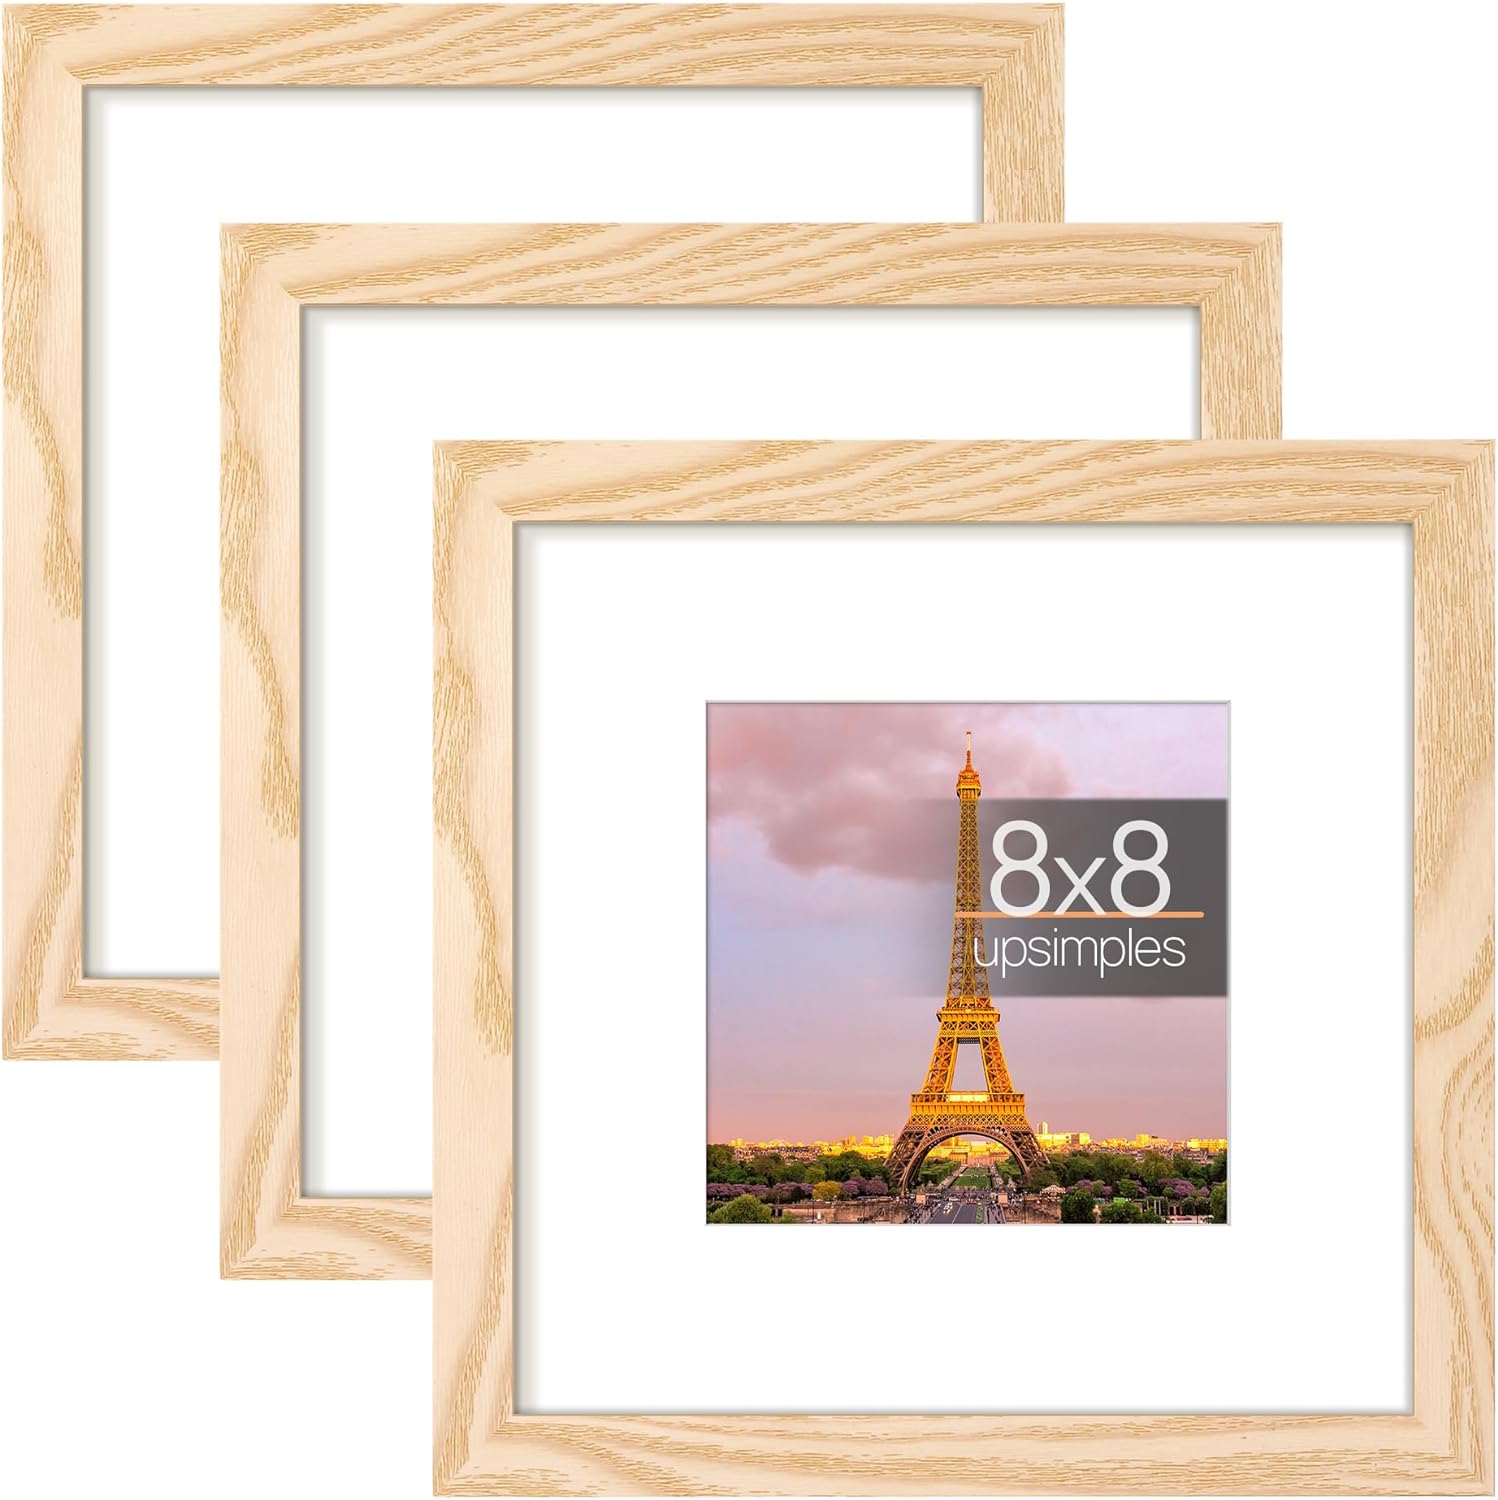 Restickable 8X8 Framed Photo Prints - Picture Frames - 8X8 Frame -  Gallery Wall Frame - Picture Frame Collage - Photo Frames - Picture Frame